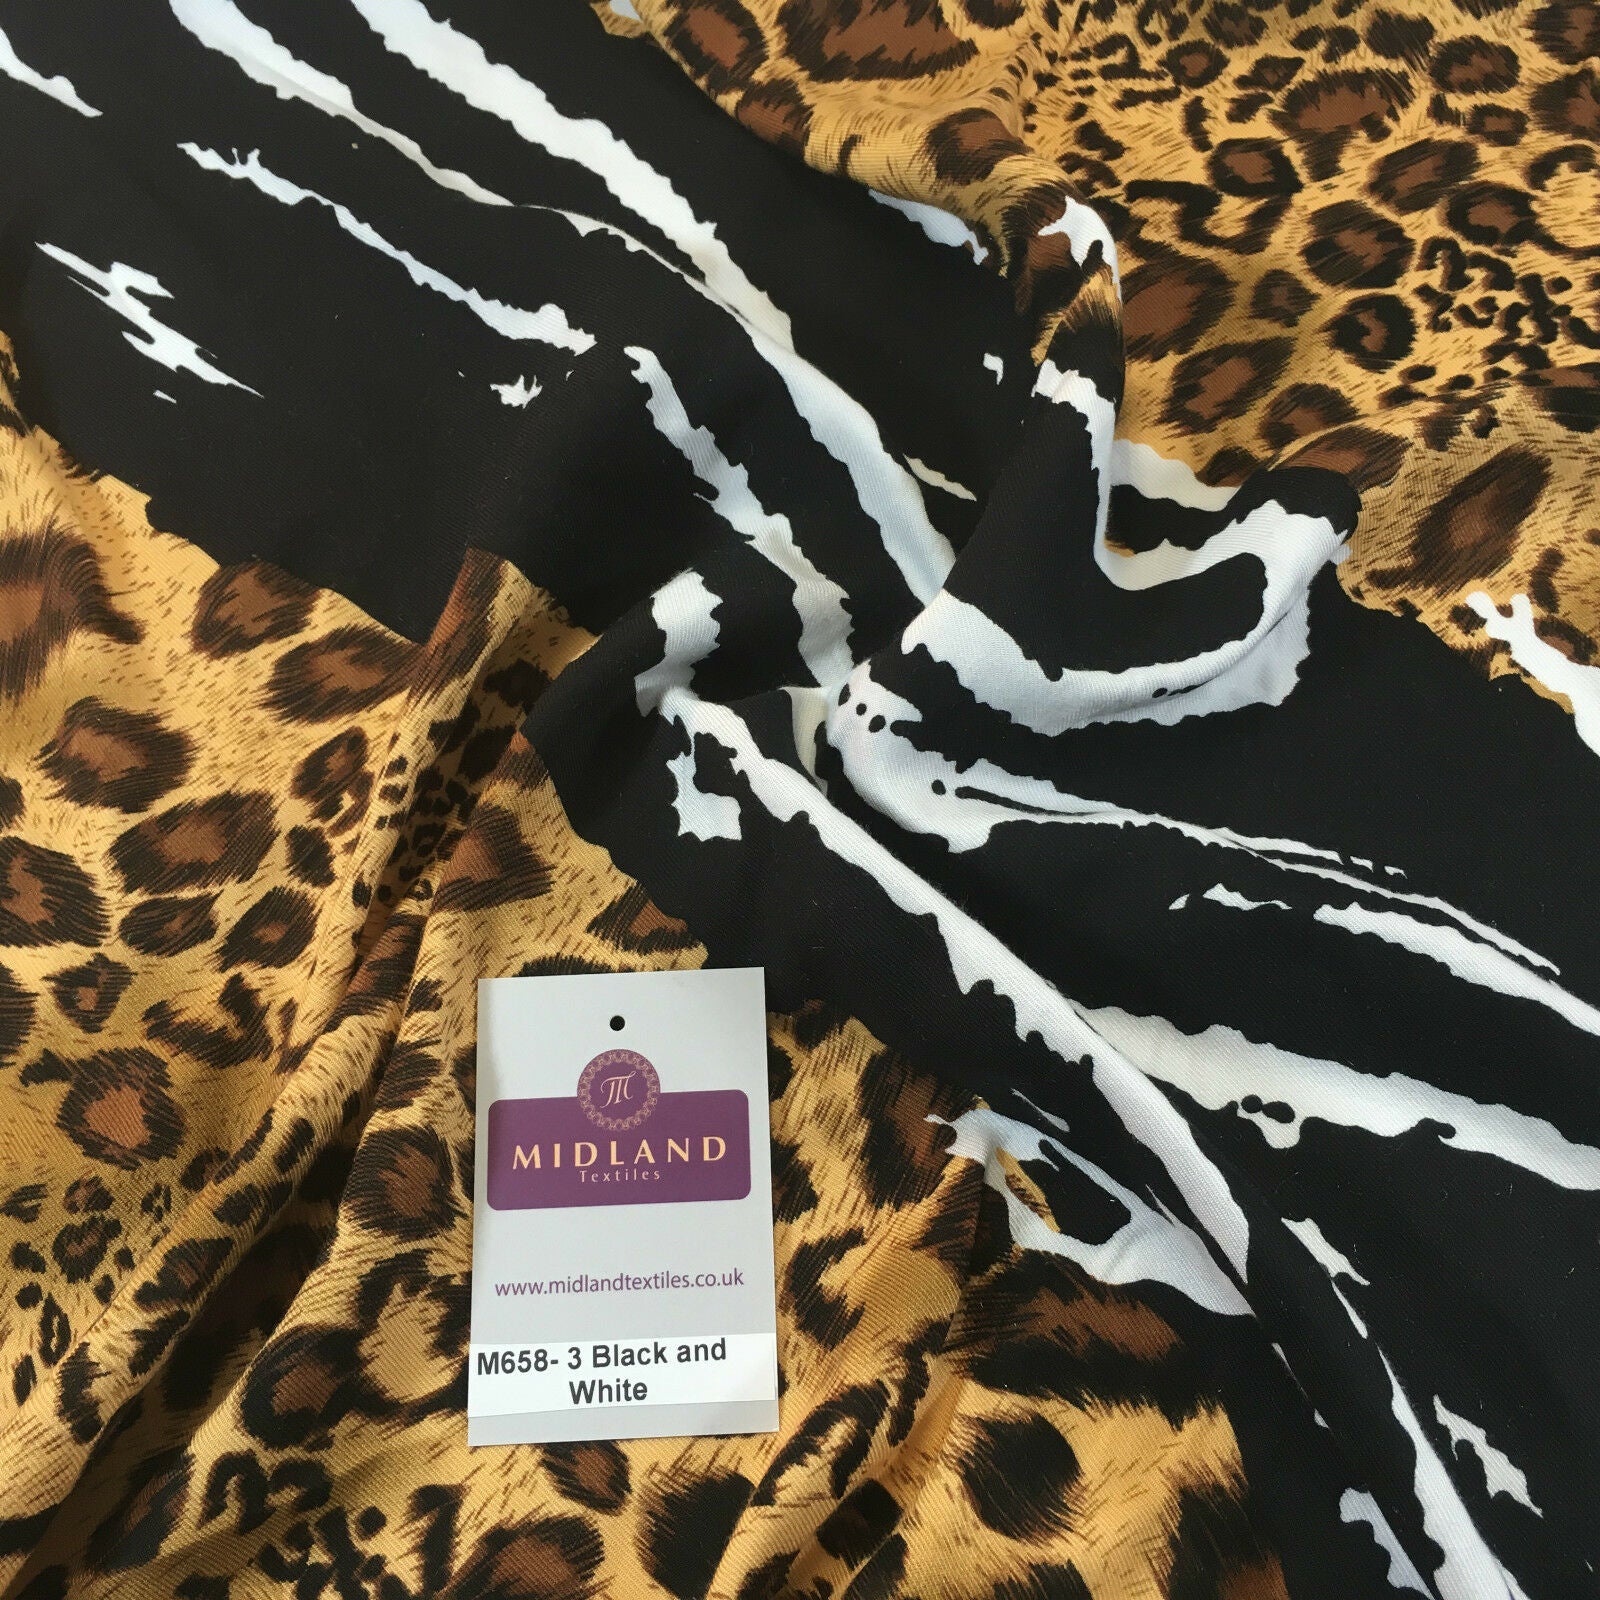 Diagonal mixed Animal theme Printed twill viscose dress fabric 58" wide M658